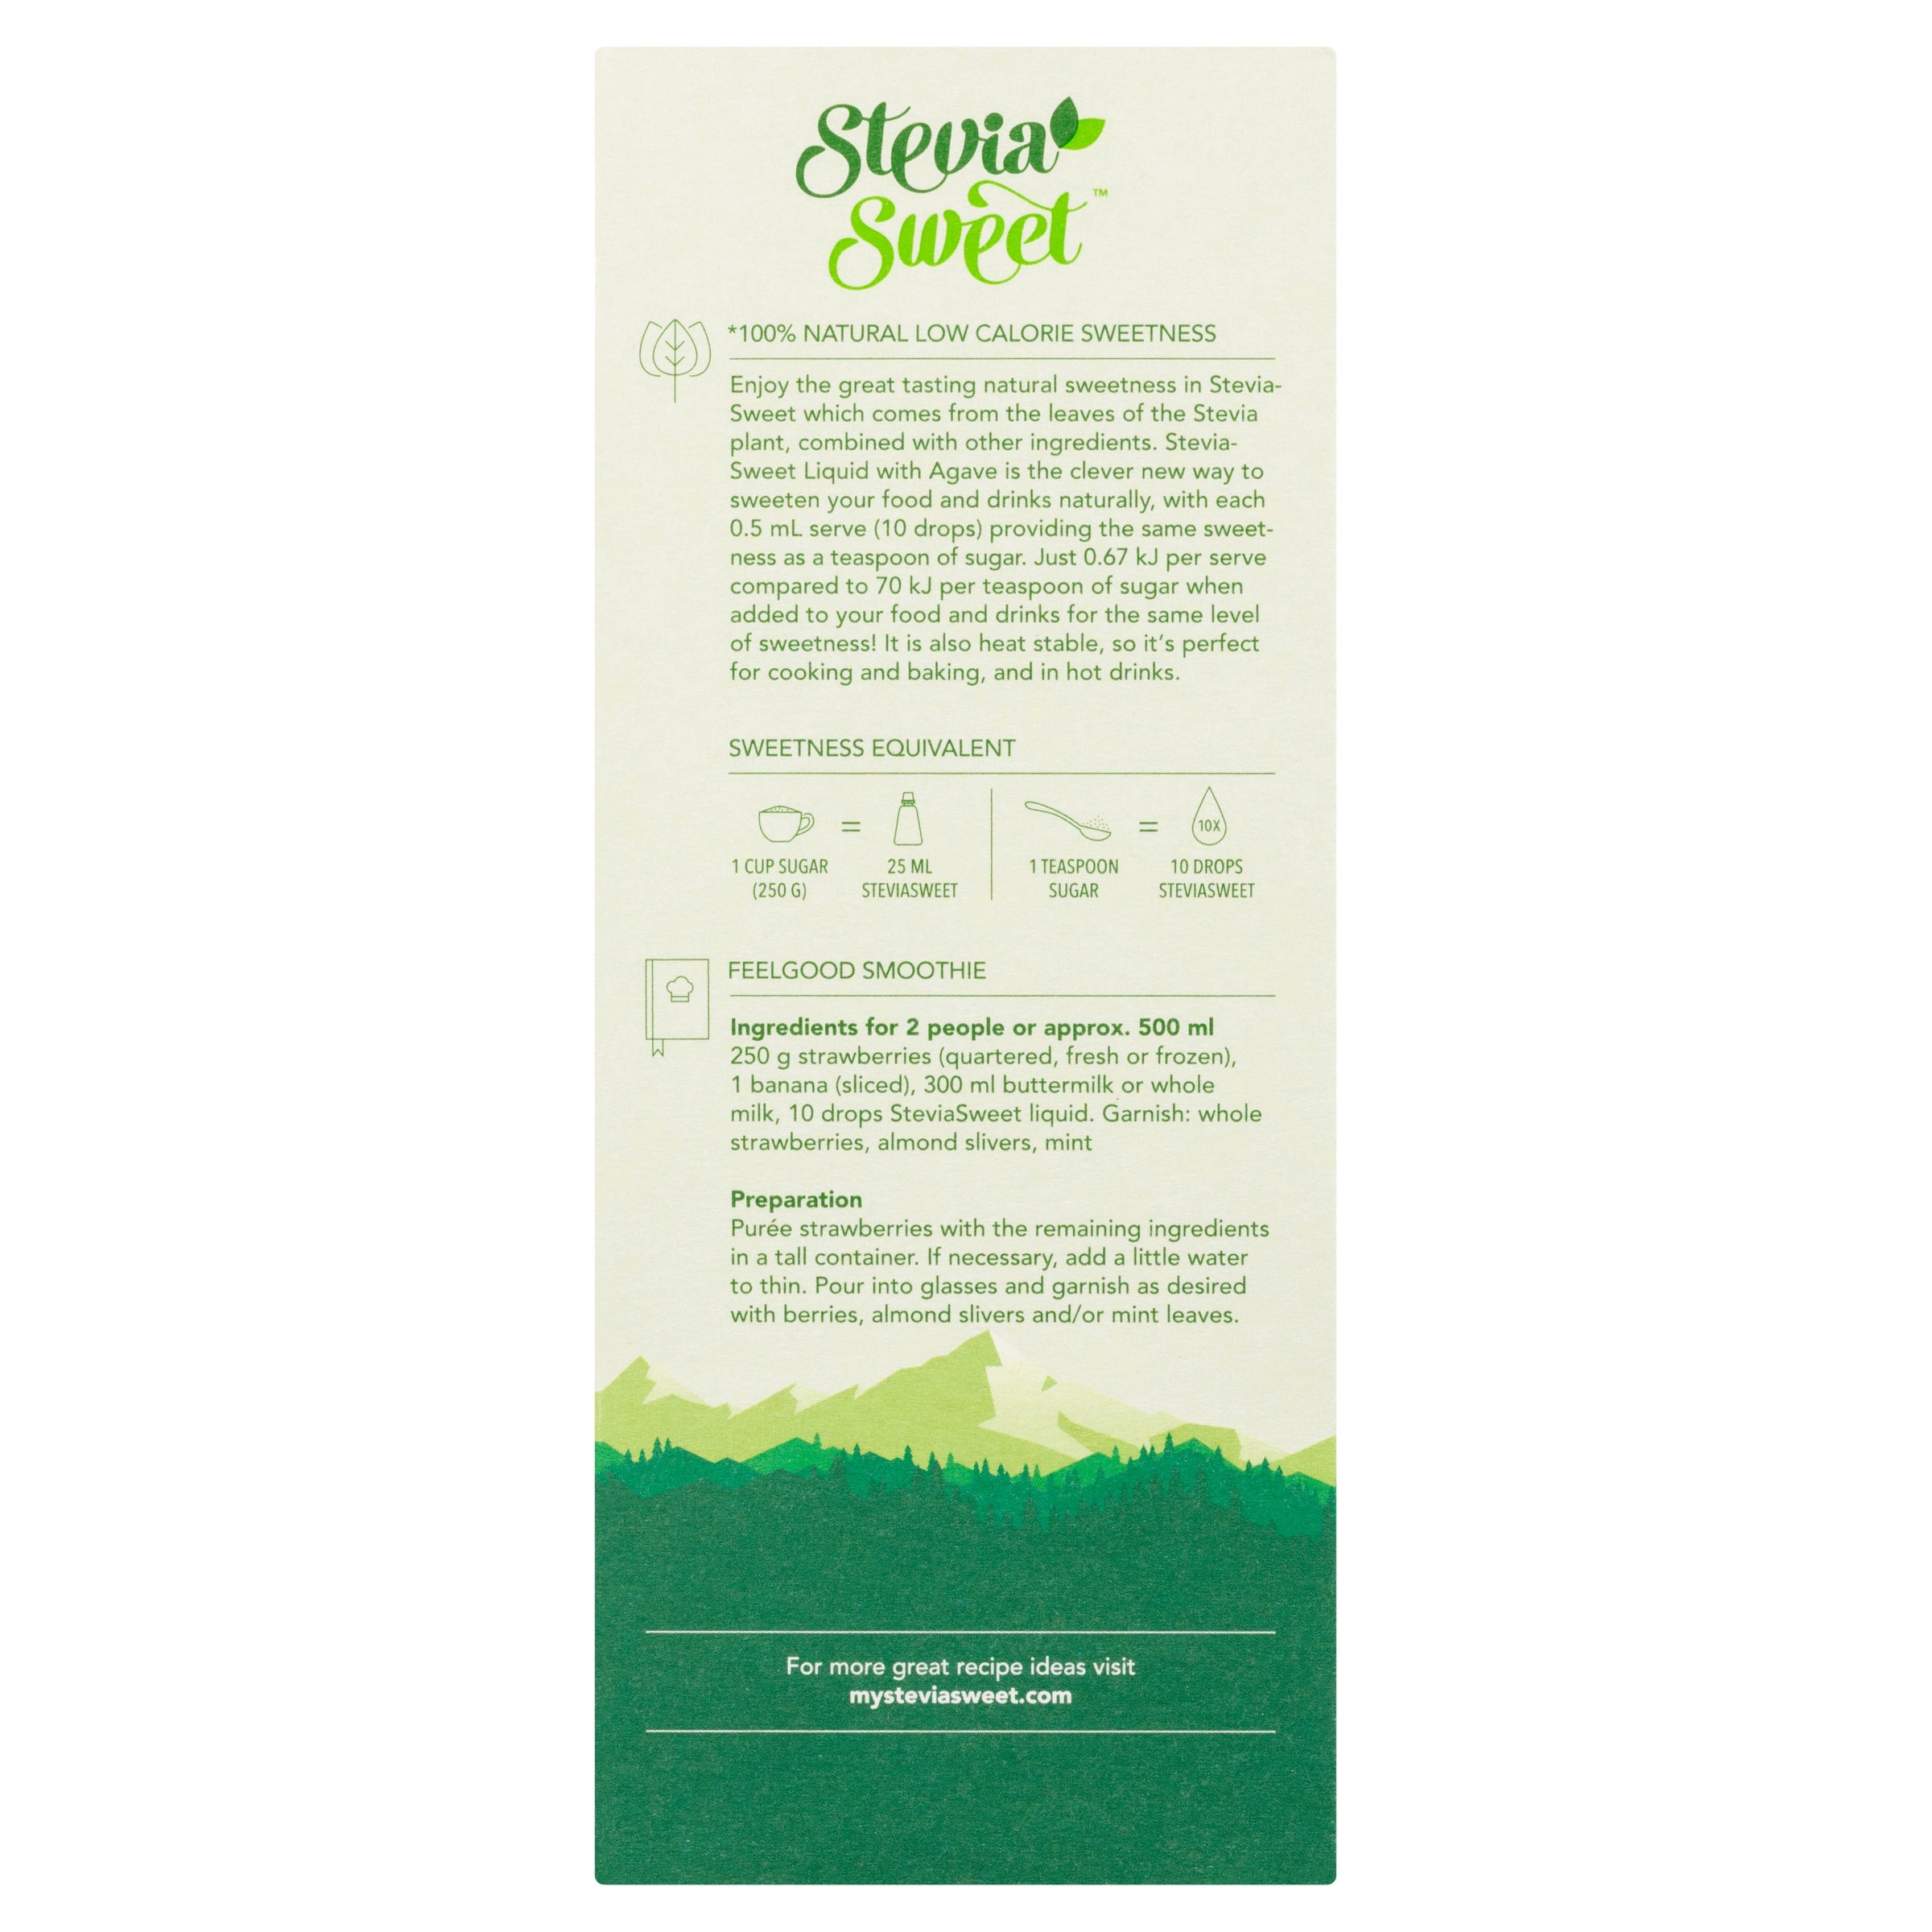 Stevia Sweet Liquid with Agave 125ml (Box of 6)